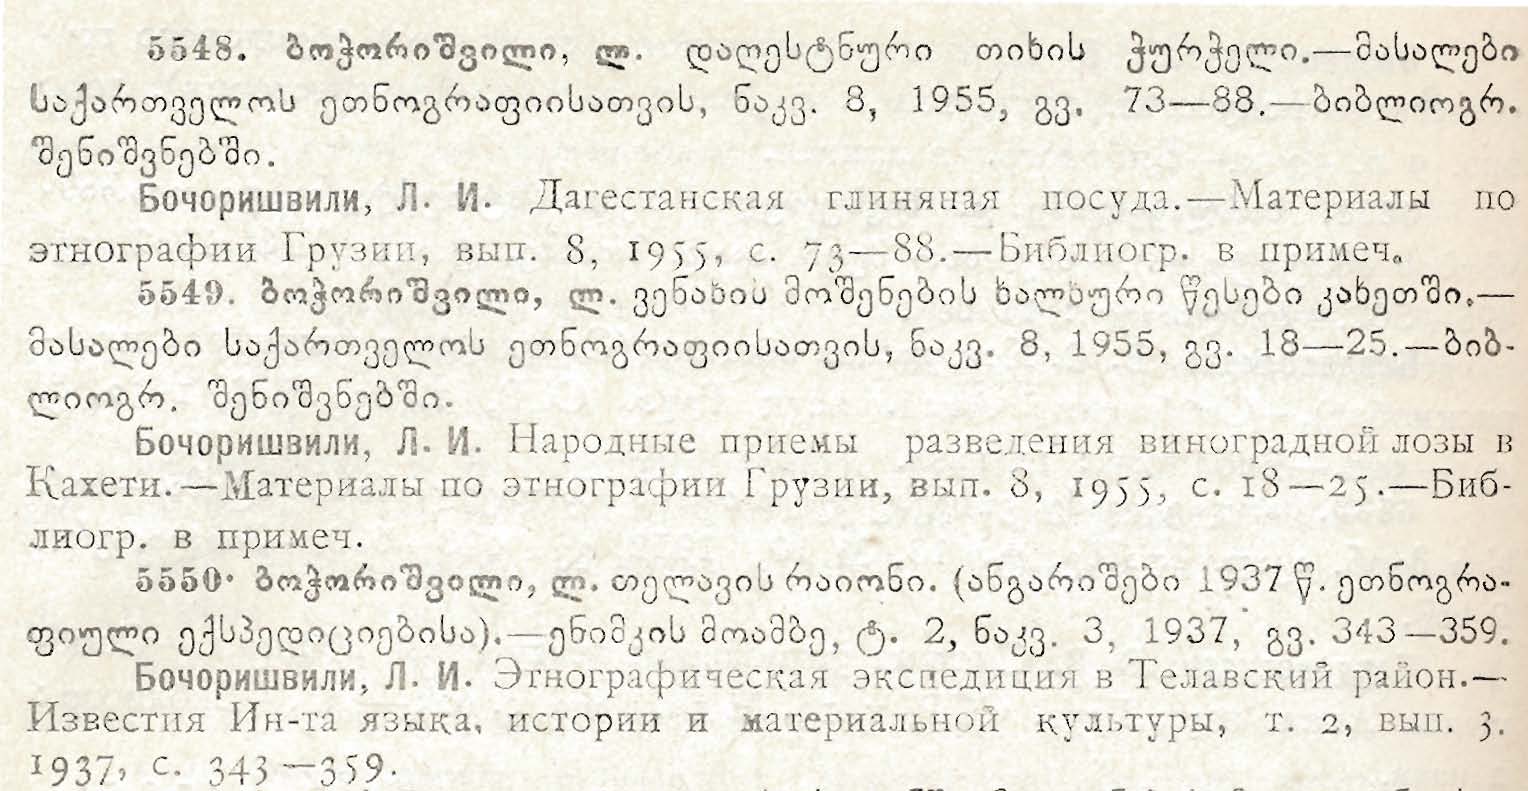 Sample entries from page 696 of SAK'ART'VELOS SSR MEC'NIEREBAT'A AKADEMIIS GAMOC'EMAT'A BIBLIOGRAP'IA, 1937-1956 CC. (T'bilisi, 1959)